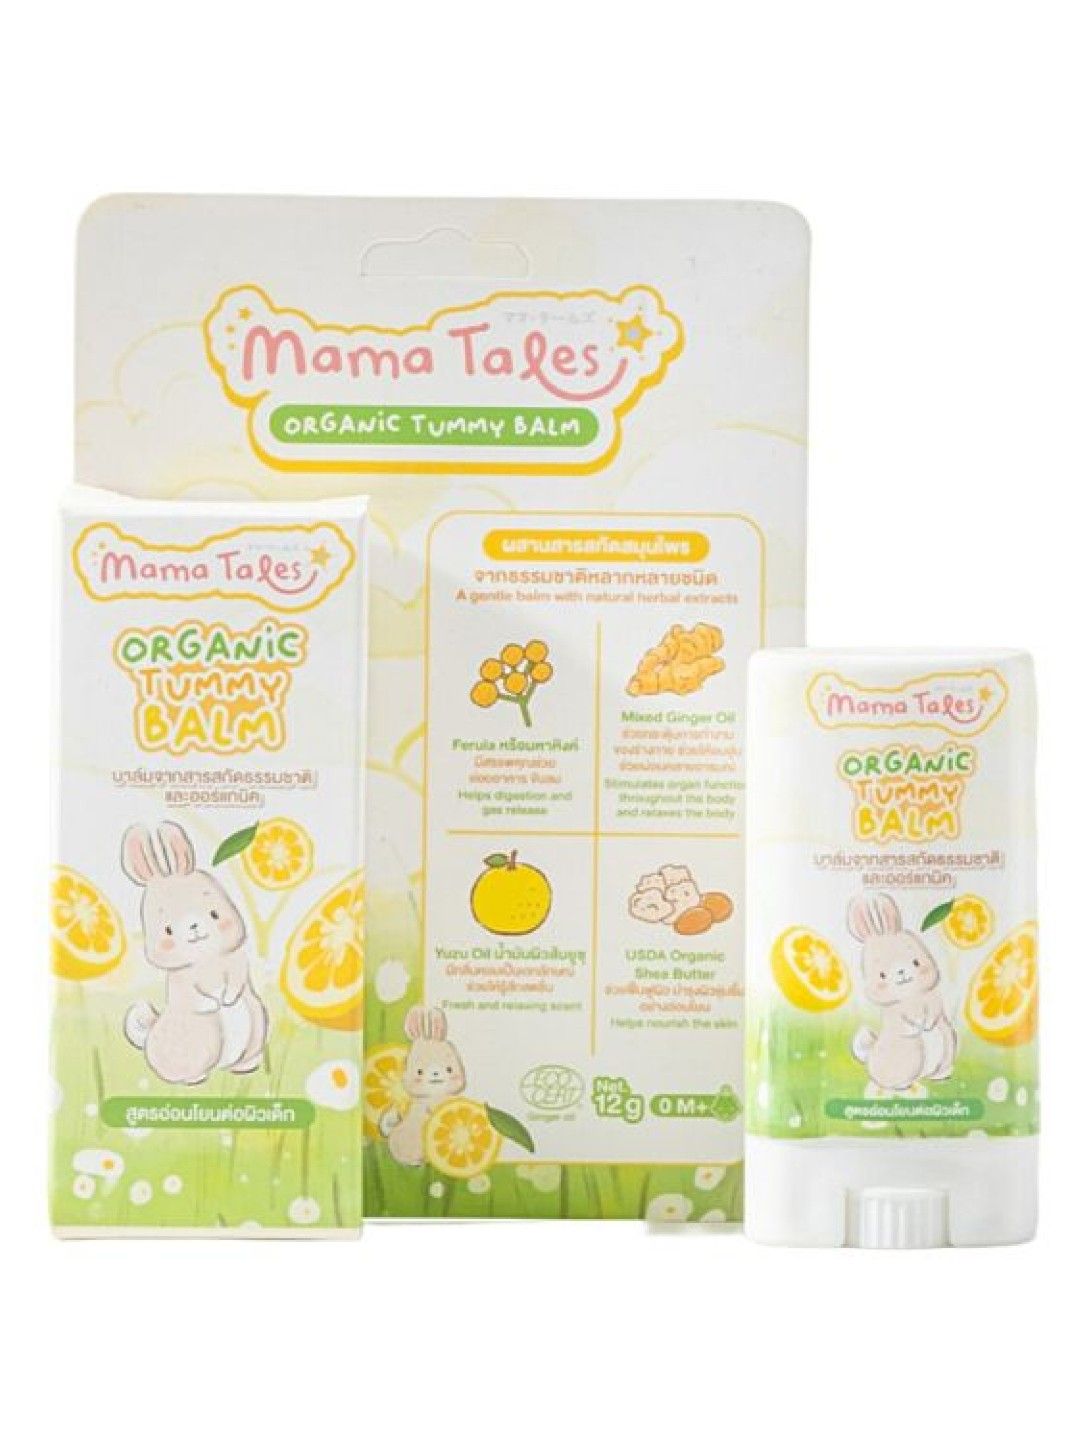 Mama Tales Organic Tummy Balm - Mahahing Balm Organic Yuzu Scent (12g)